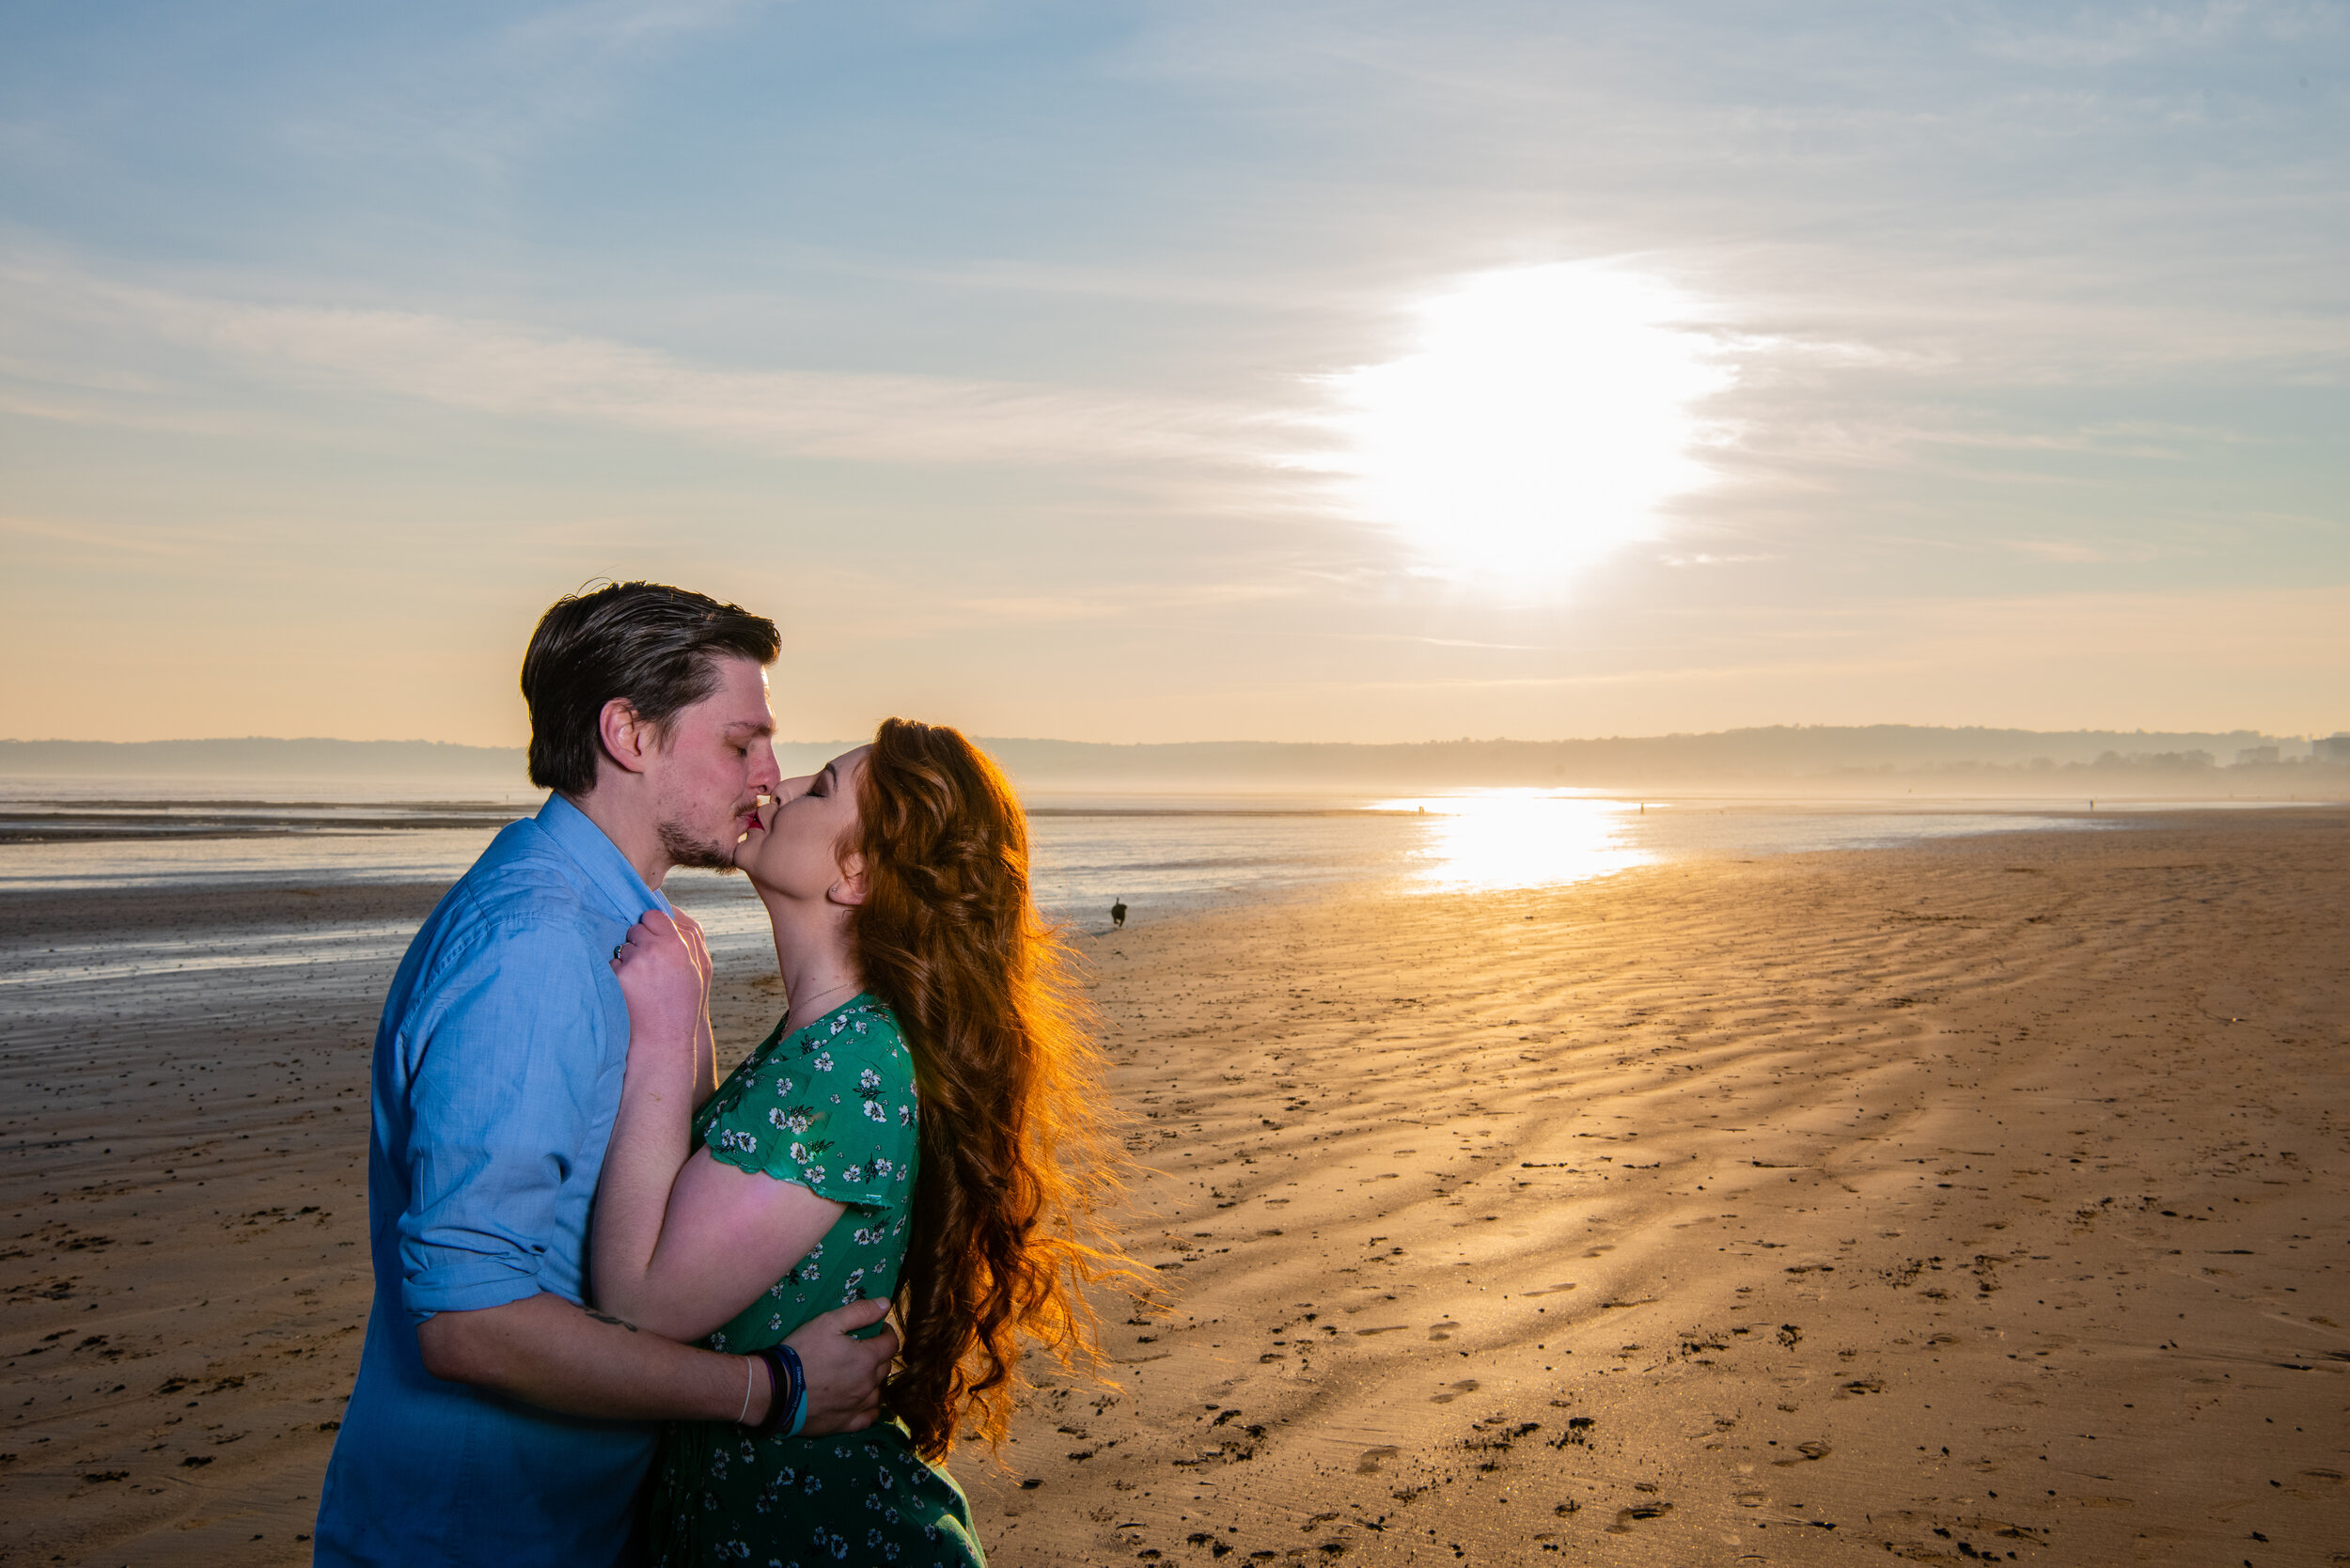 005-South-Wales-Wedding-Photography-Engagement-Photoshoot-Photographer.jpg